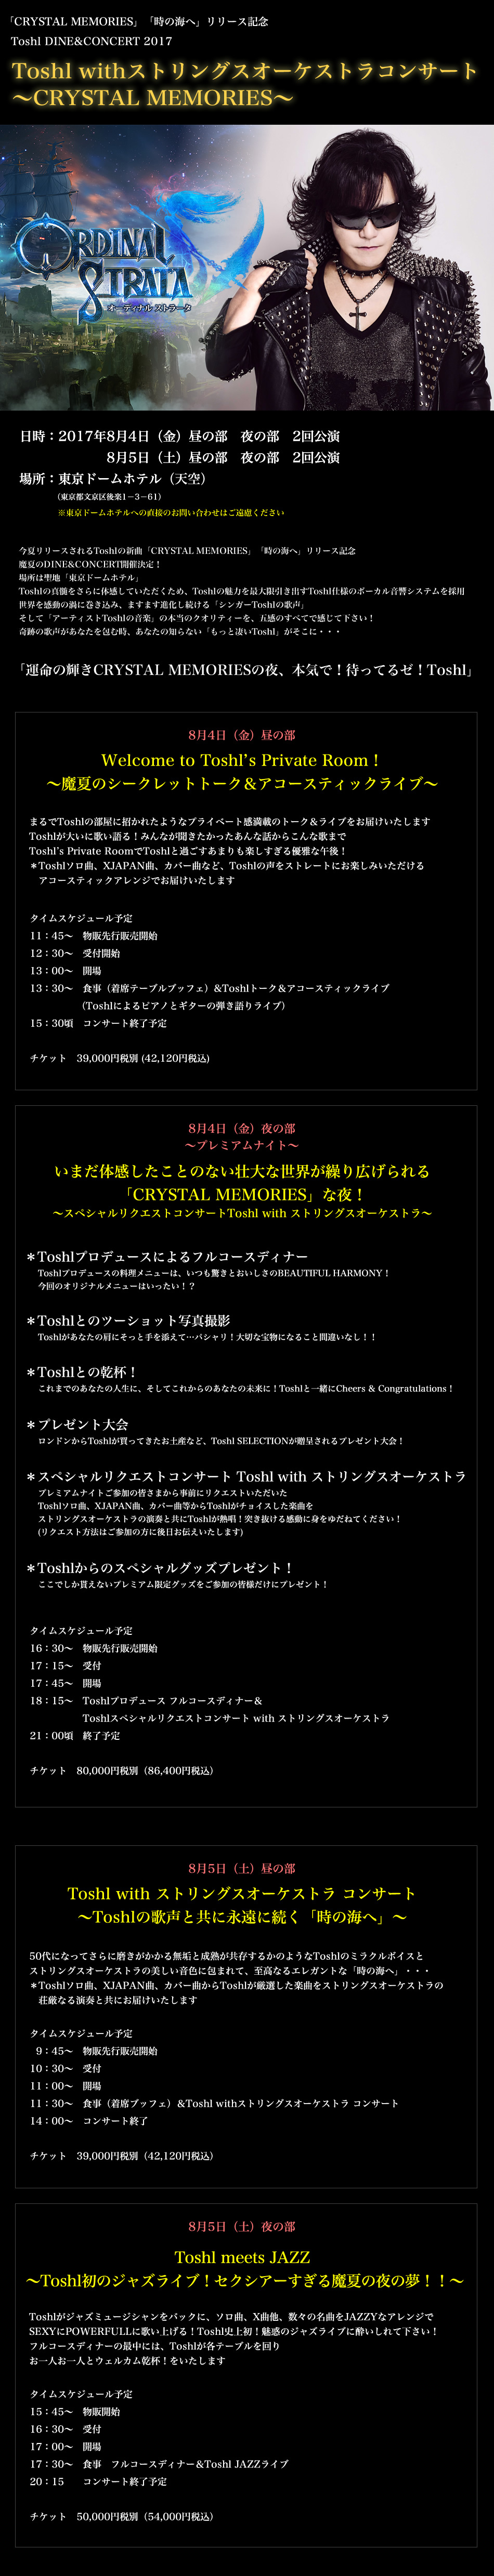 Toshl withストリングスオーケストラコンサート
〜CRYSTAL MEMORIES〜